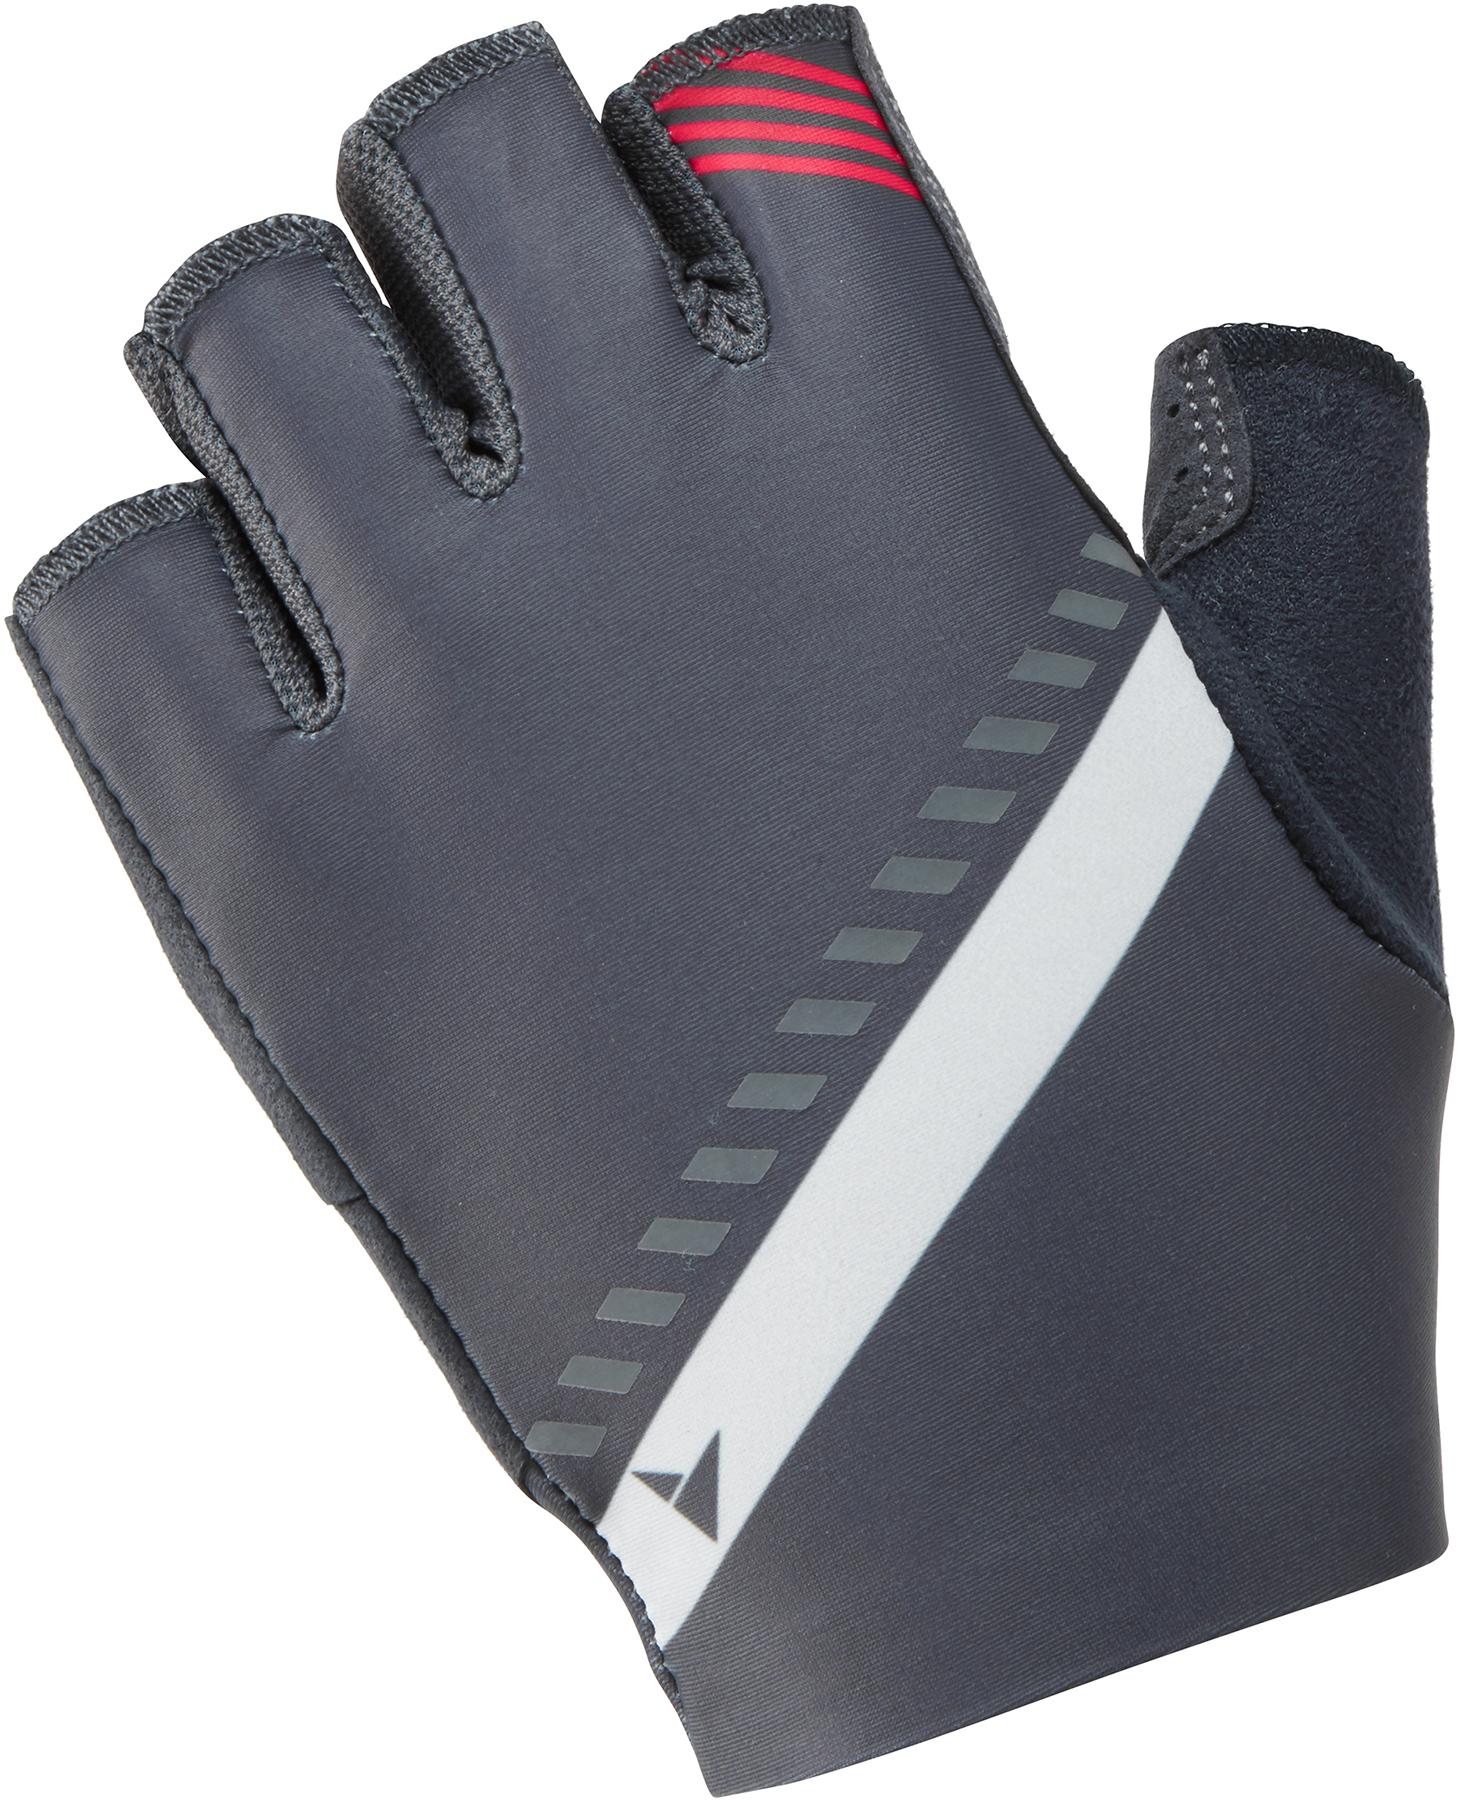 Altura Progel Cycling Gloves - Navy/grey